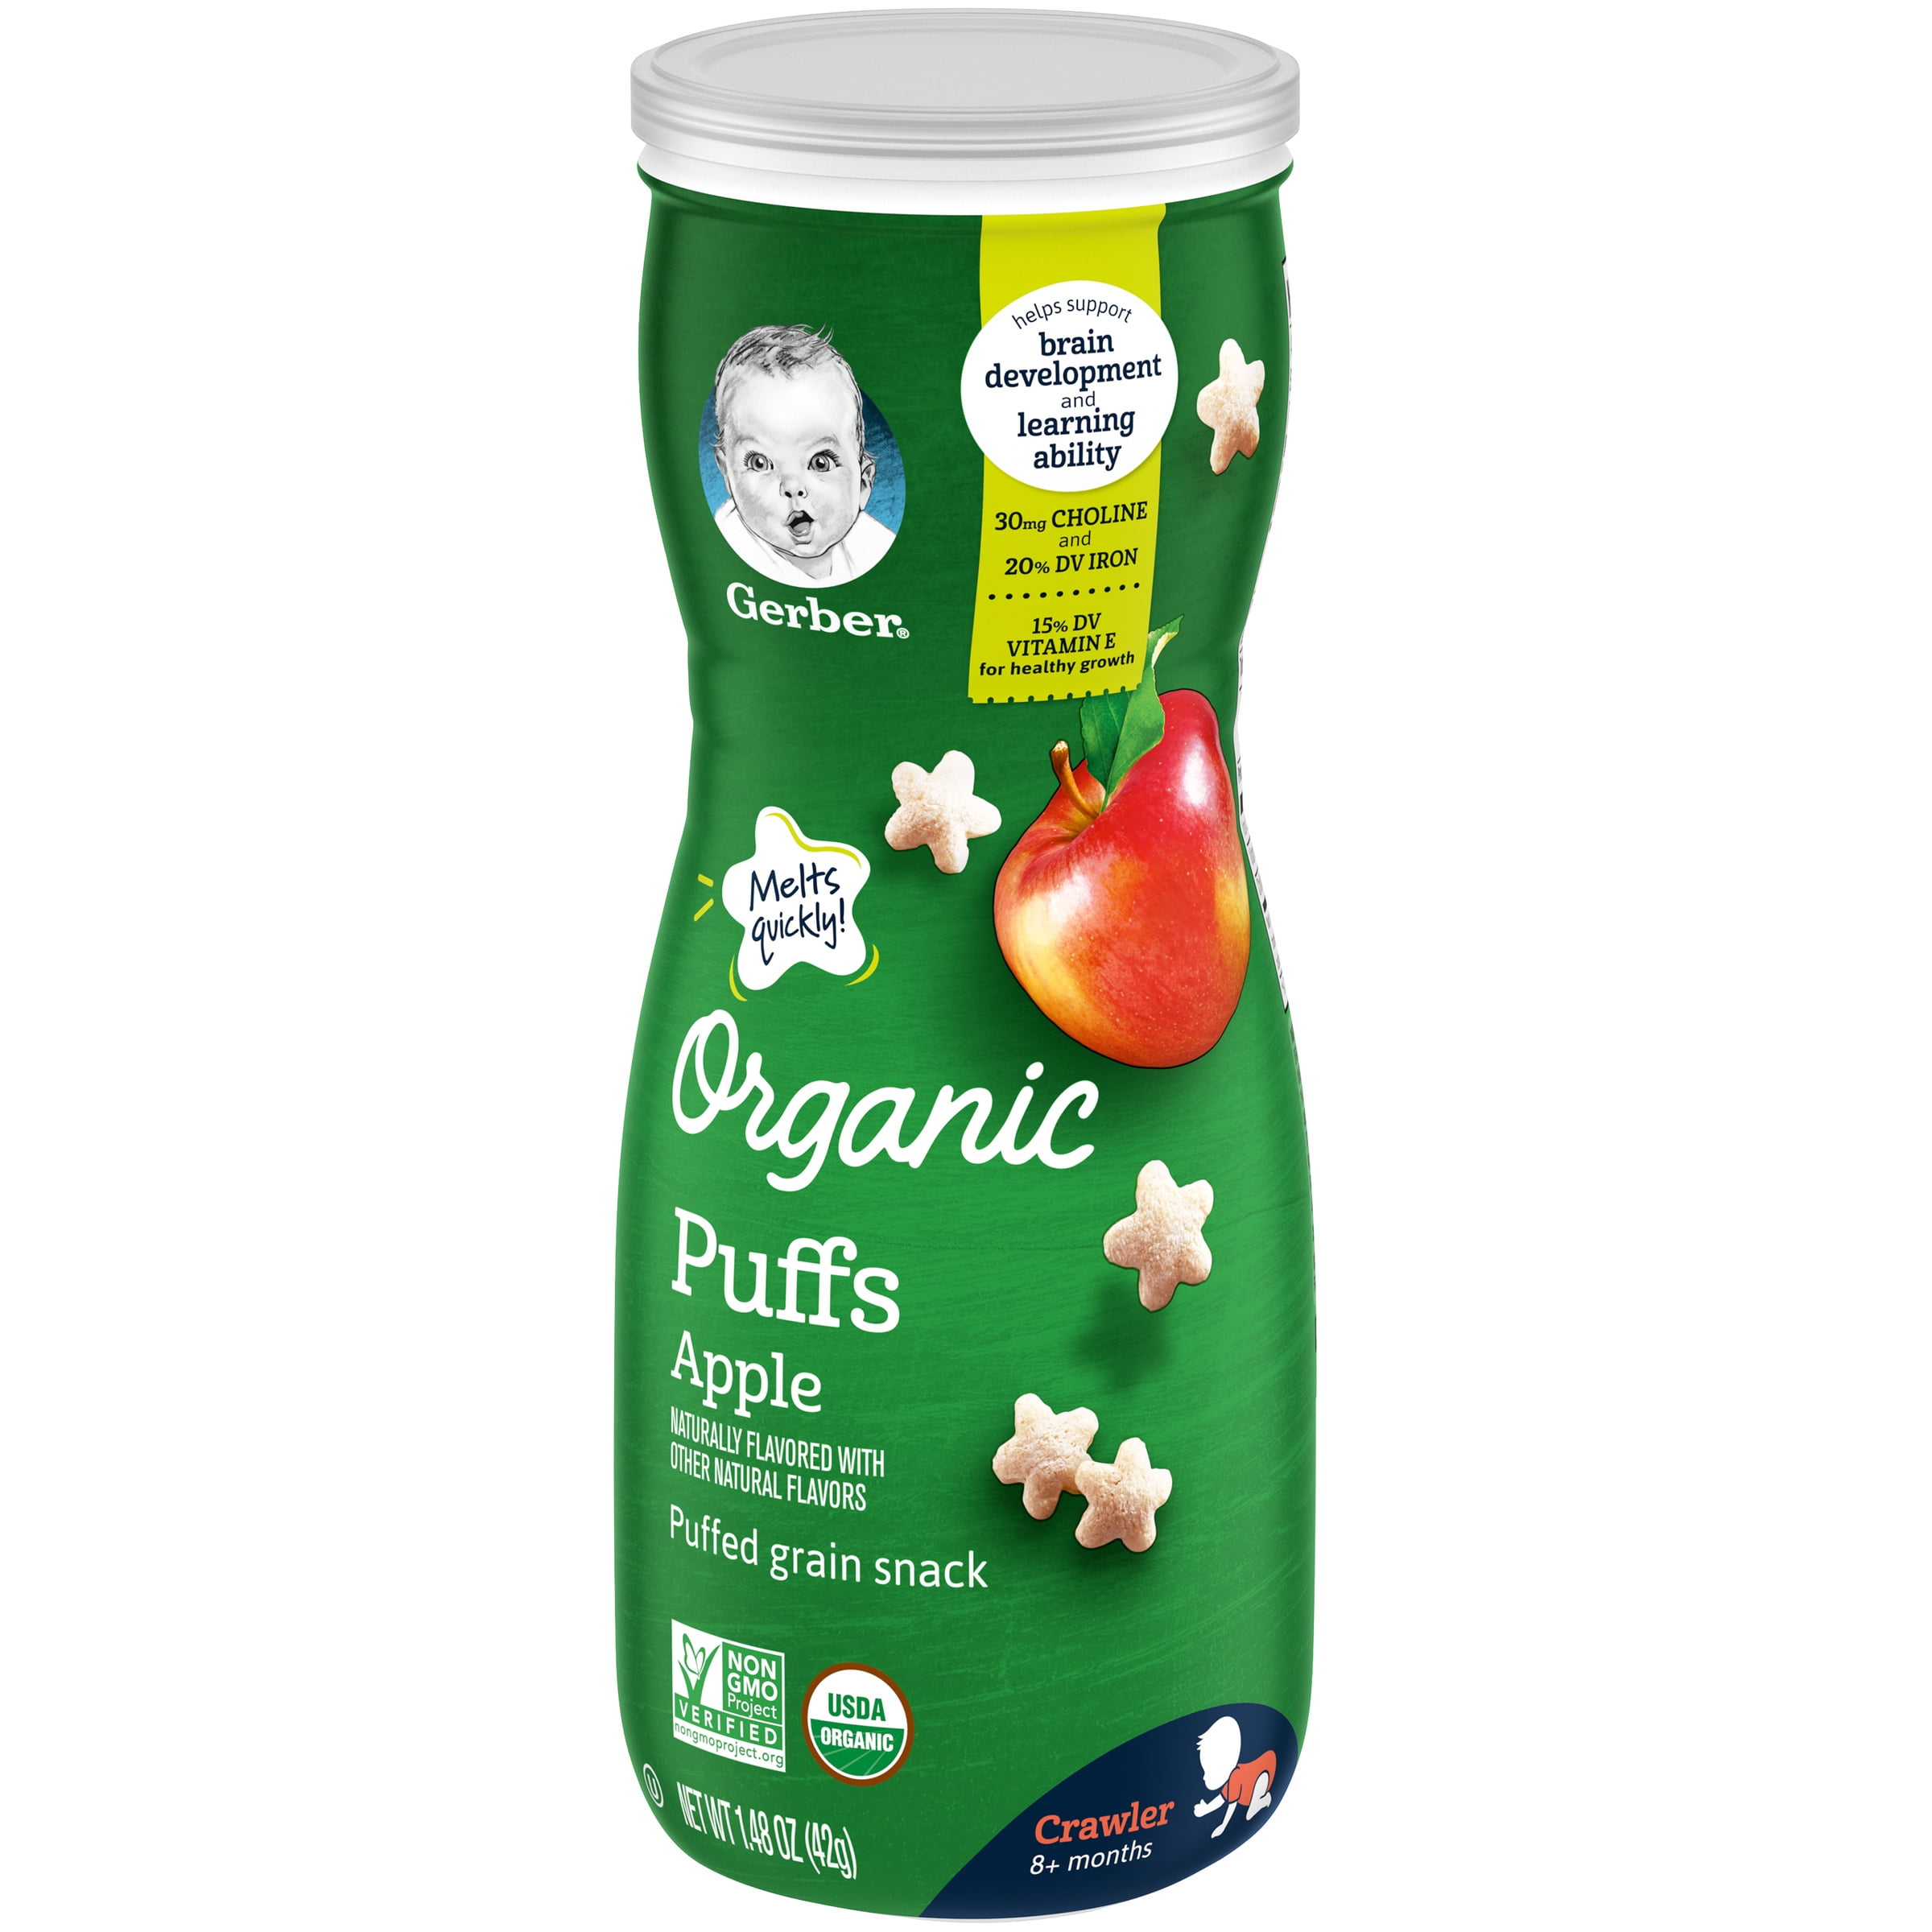 Gerber Organic Puffs, Apple, 1.48 oz. - Walmart.com - Walmart.com